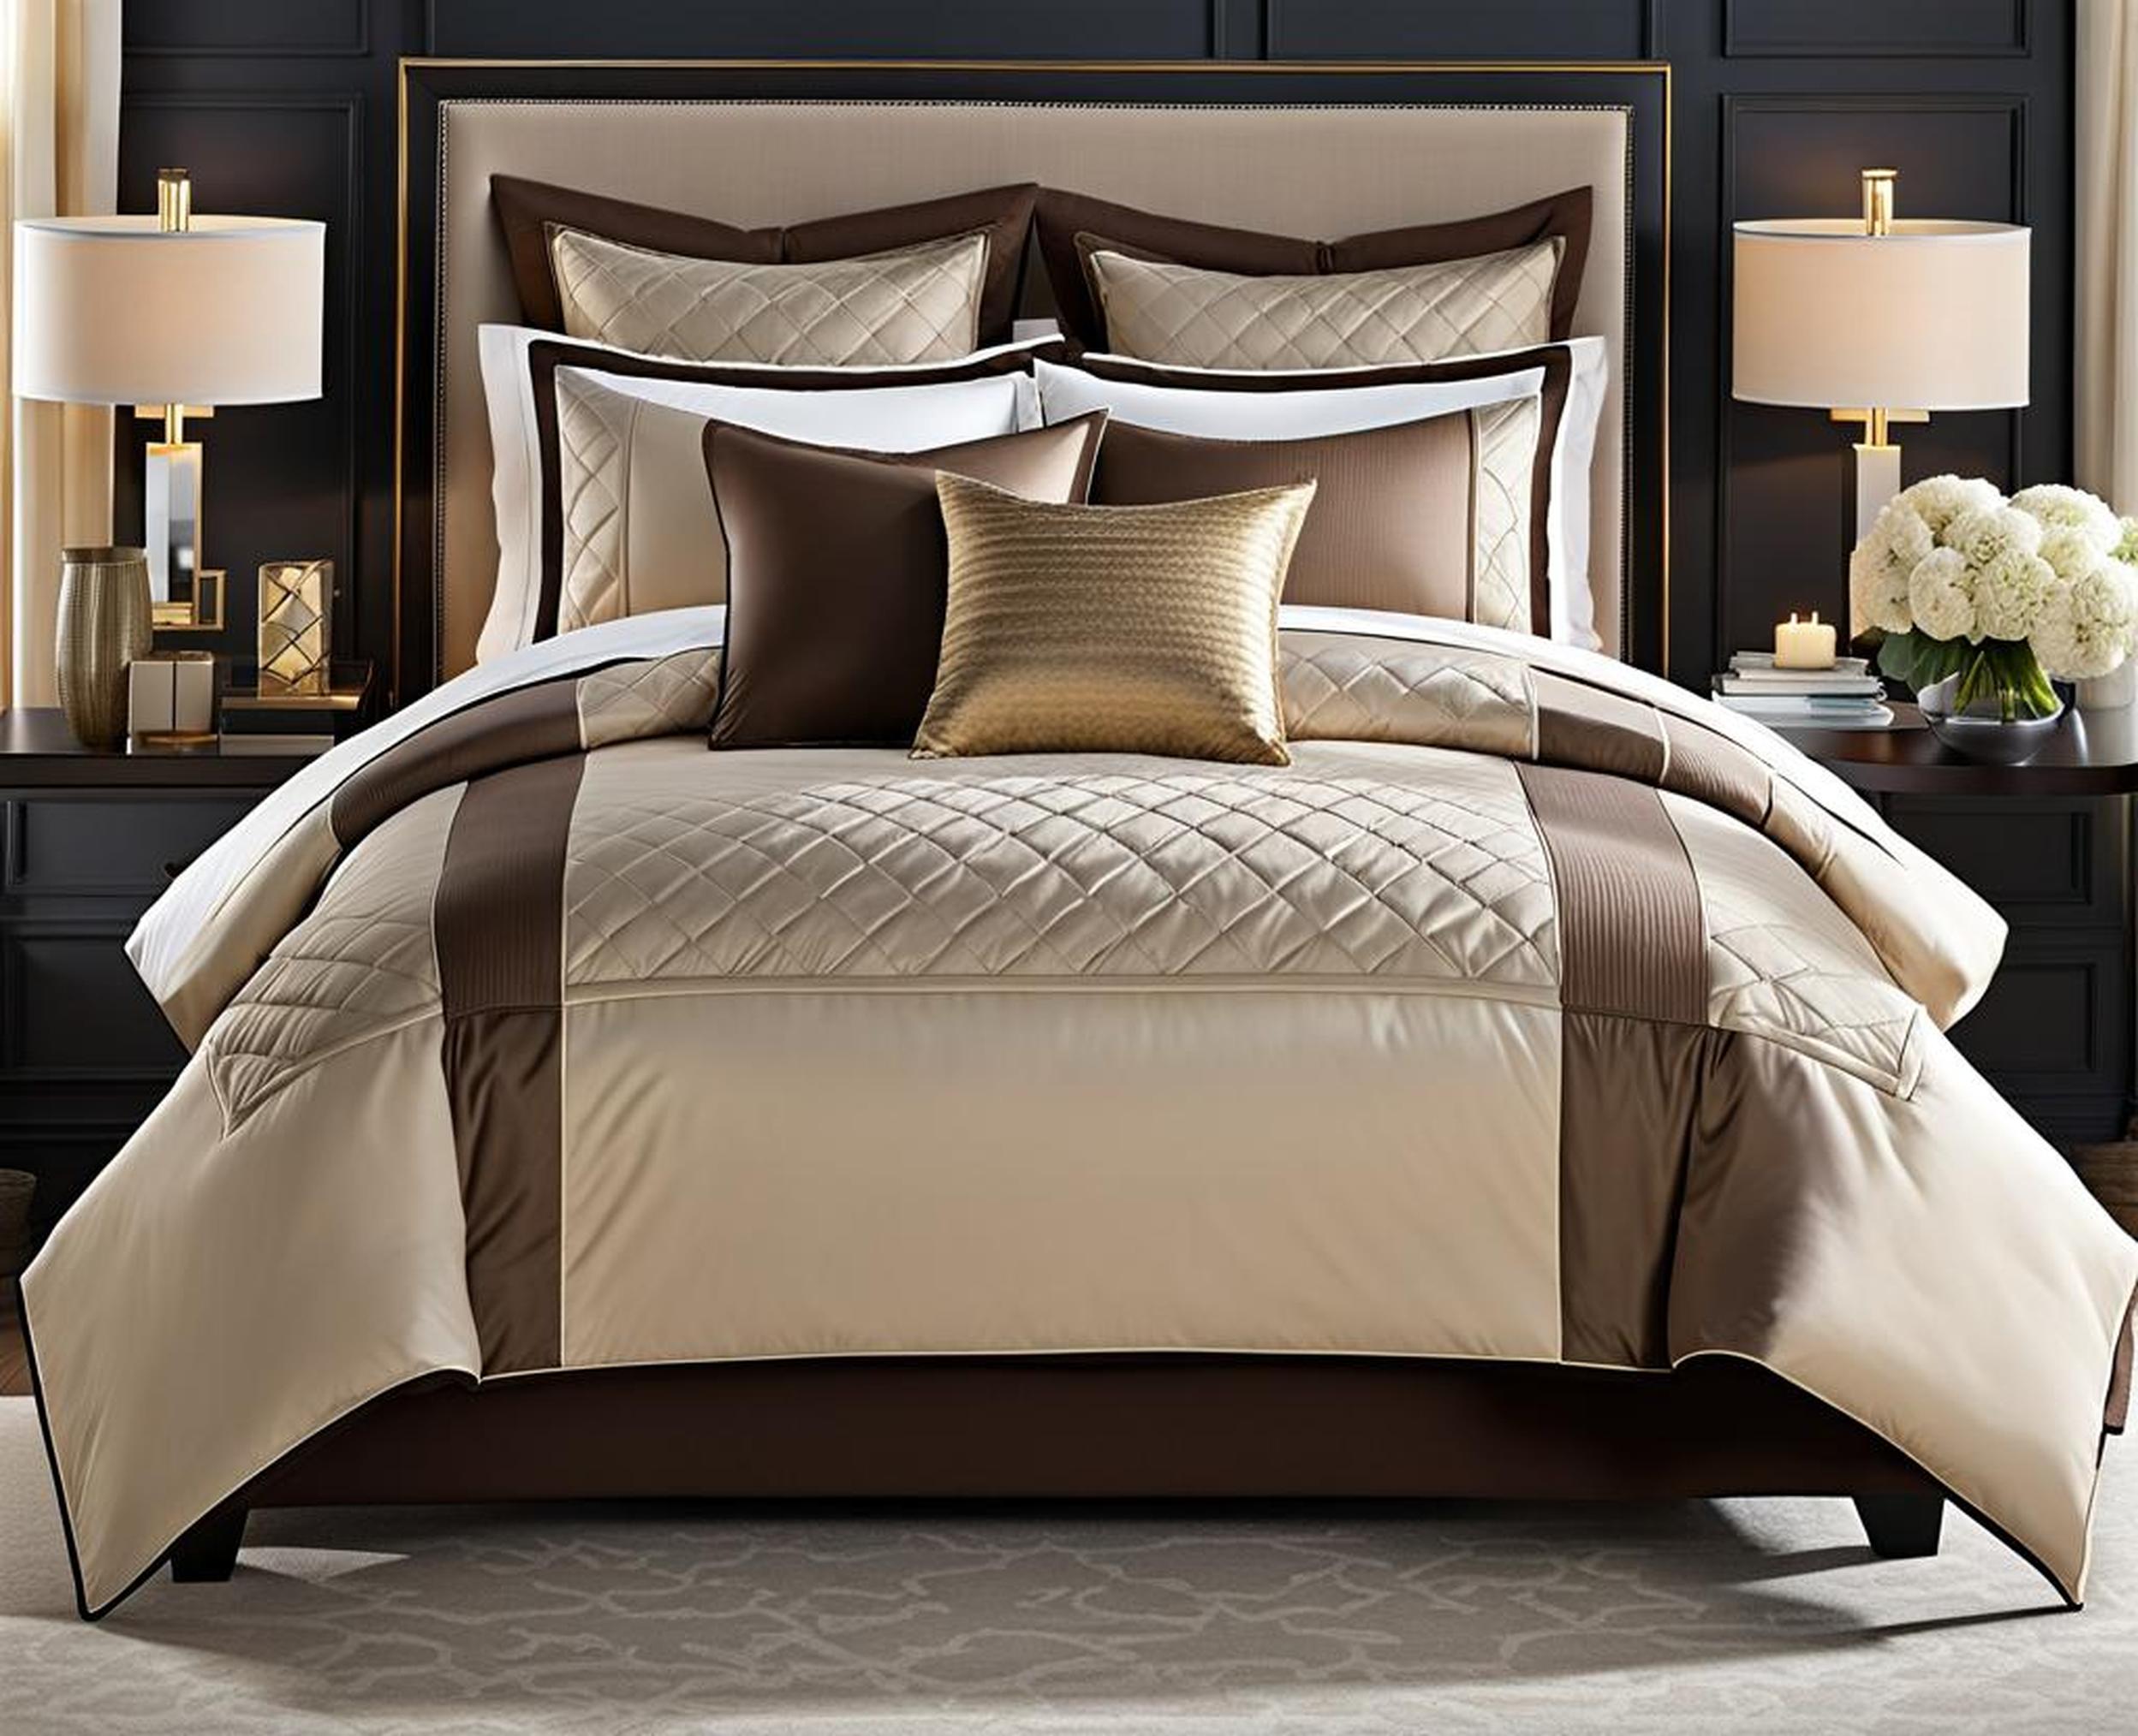 neutral color bedding sets